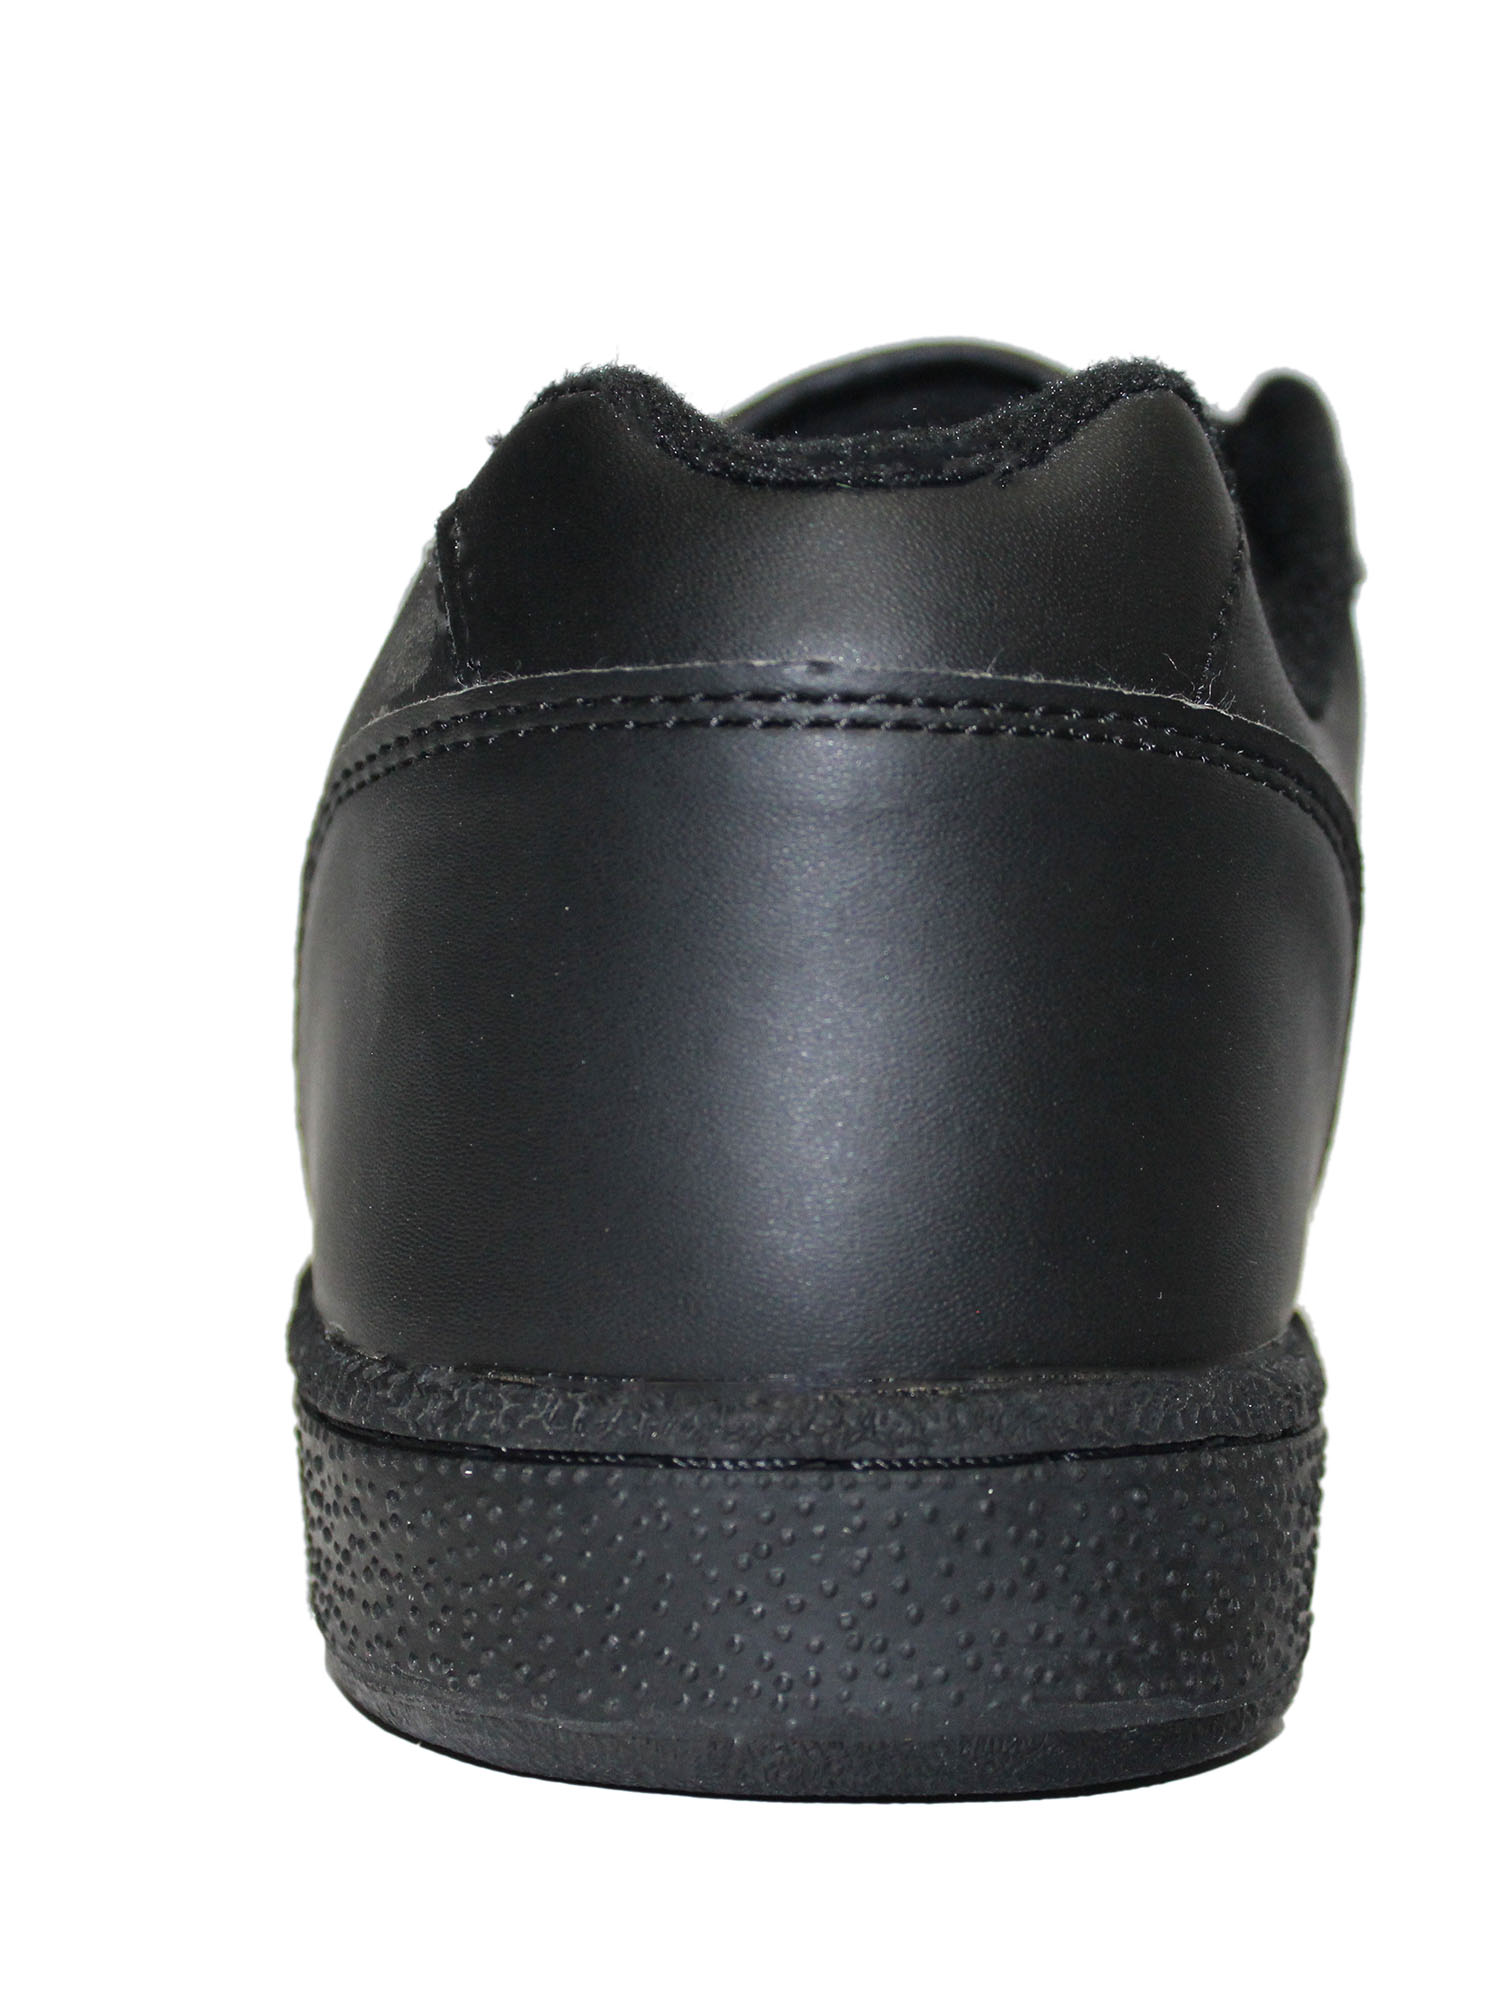 Tanleewa Men's Leather Strap Sneakers Lightweight Hook and Loop Walking Shoe Size 6.5 Adult Male - image 4 of 4